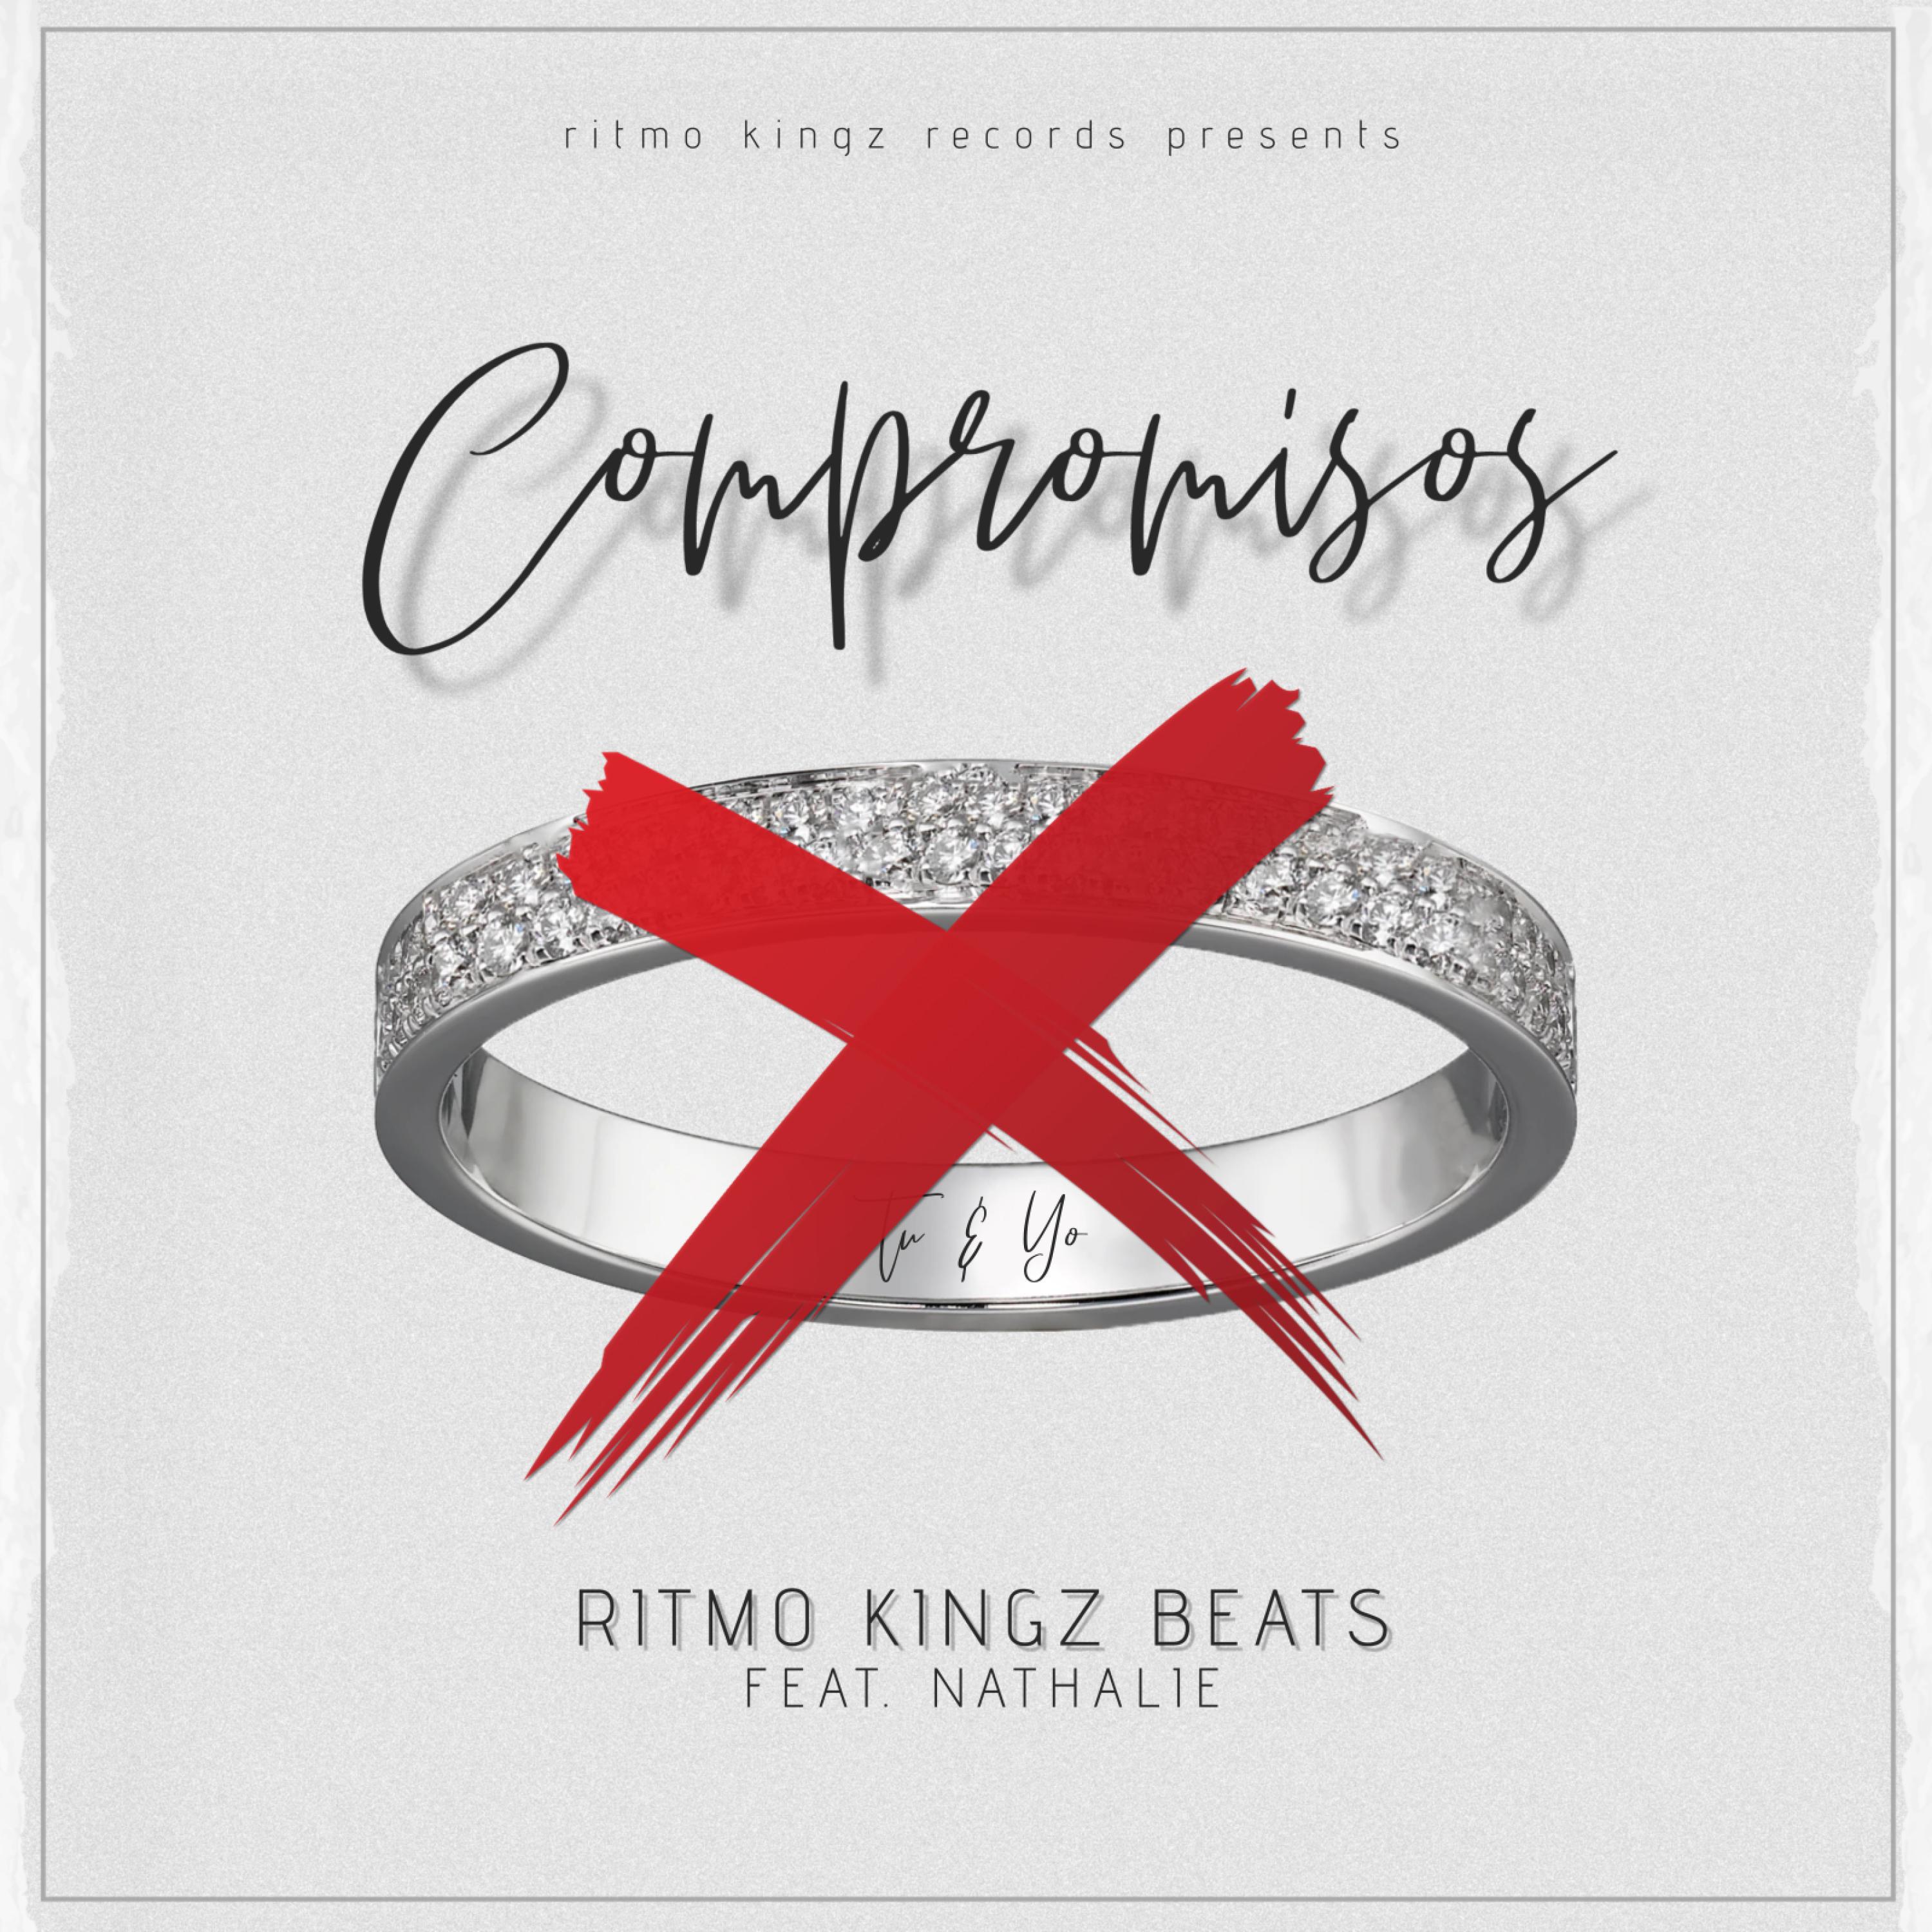 Ritmo Kingz Beats - Compromisos (feat. Nathalie)